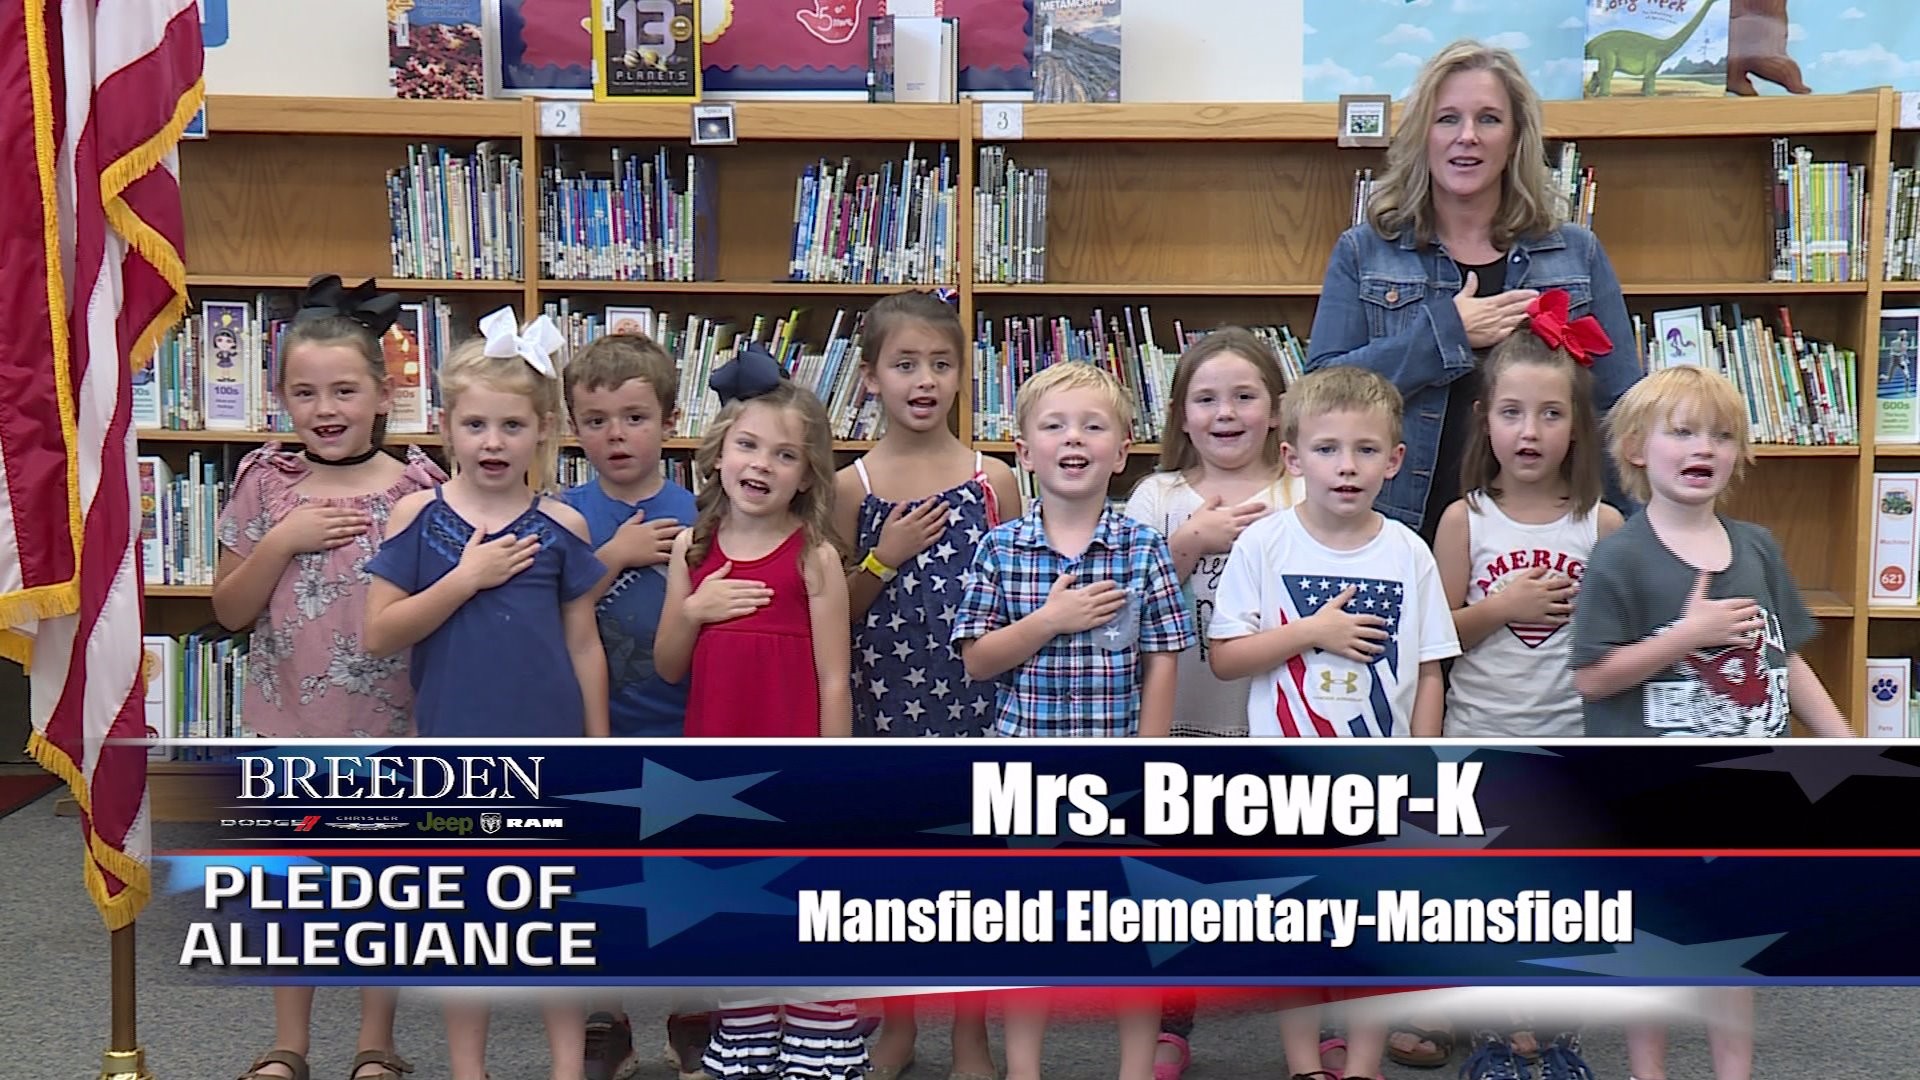 Mrs. Brewer- K Mansfield Elementary, Mansfield